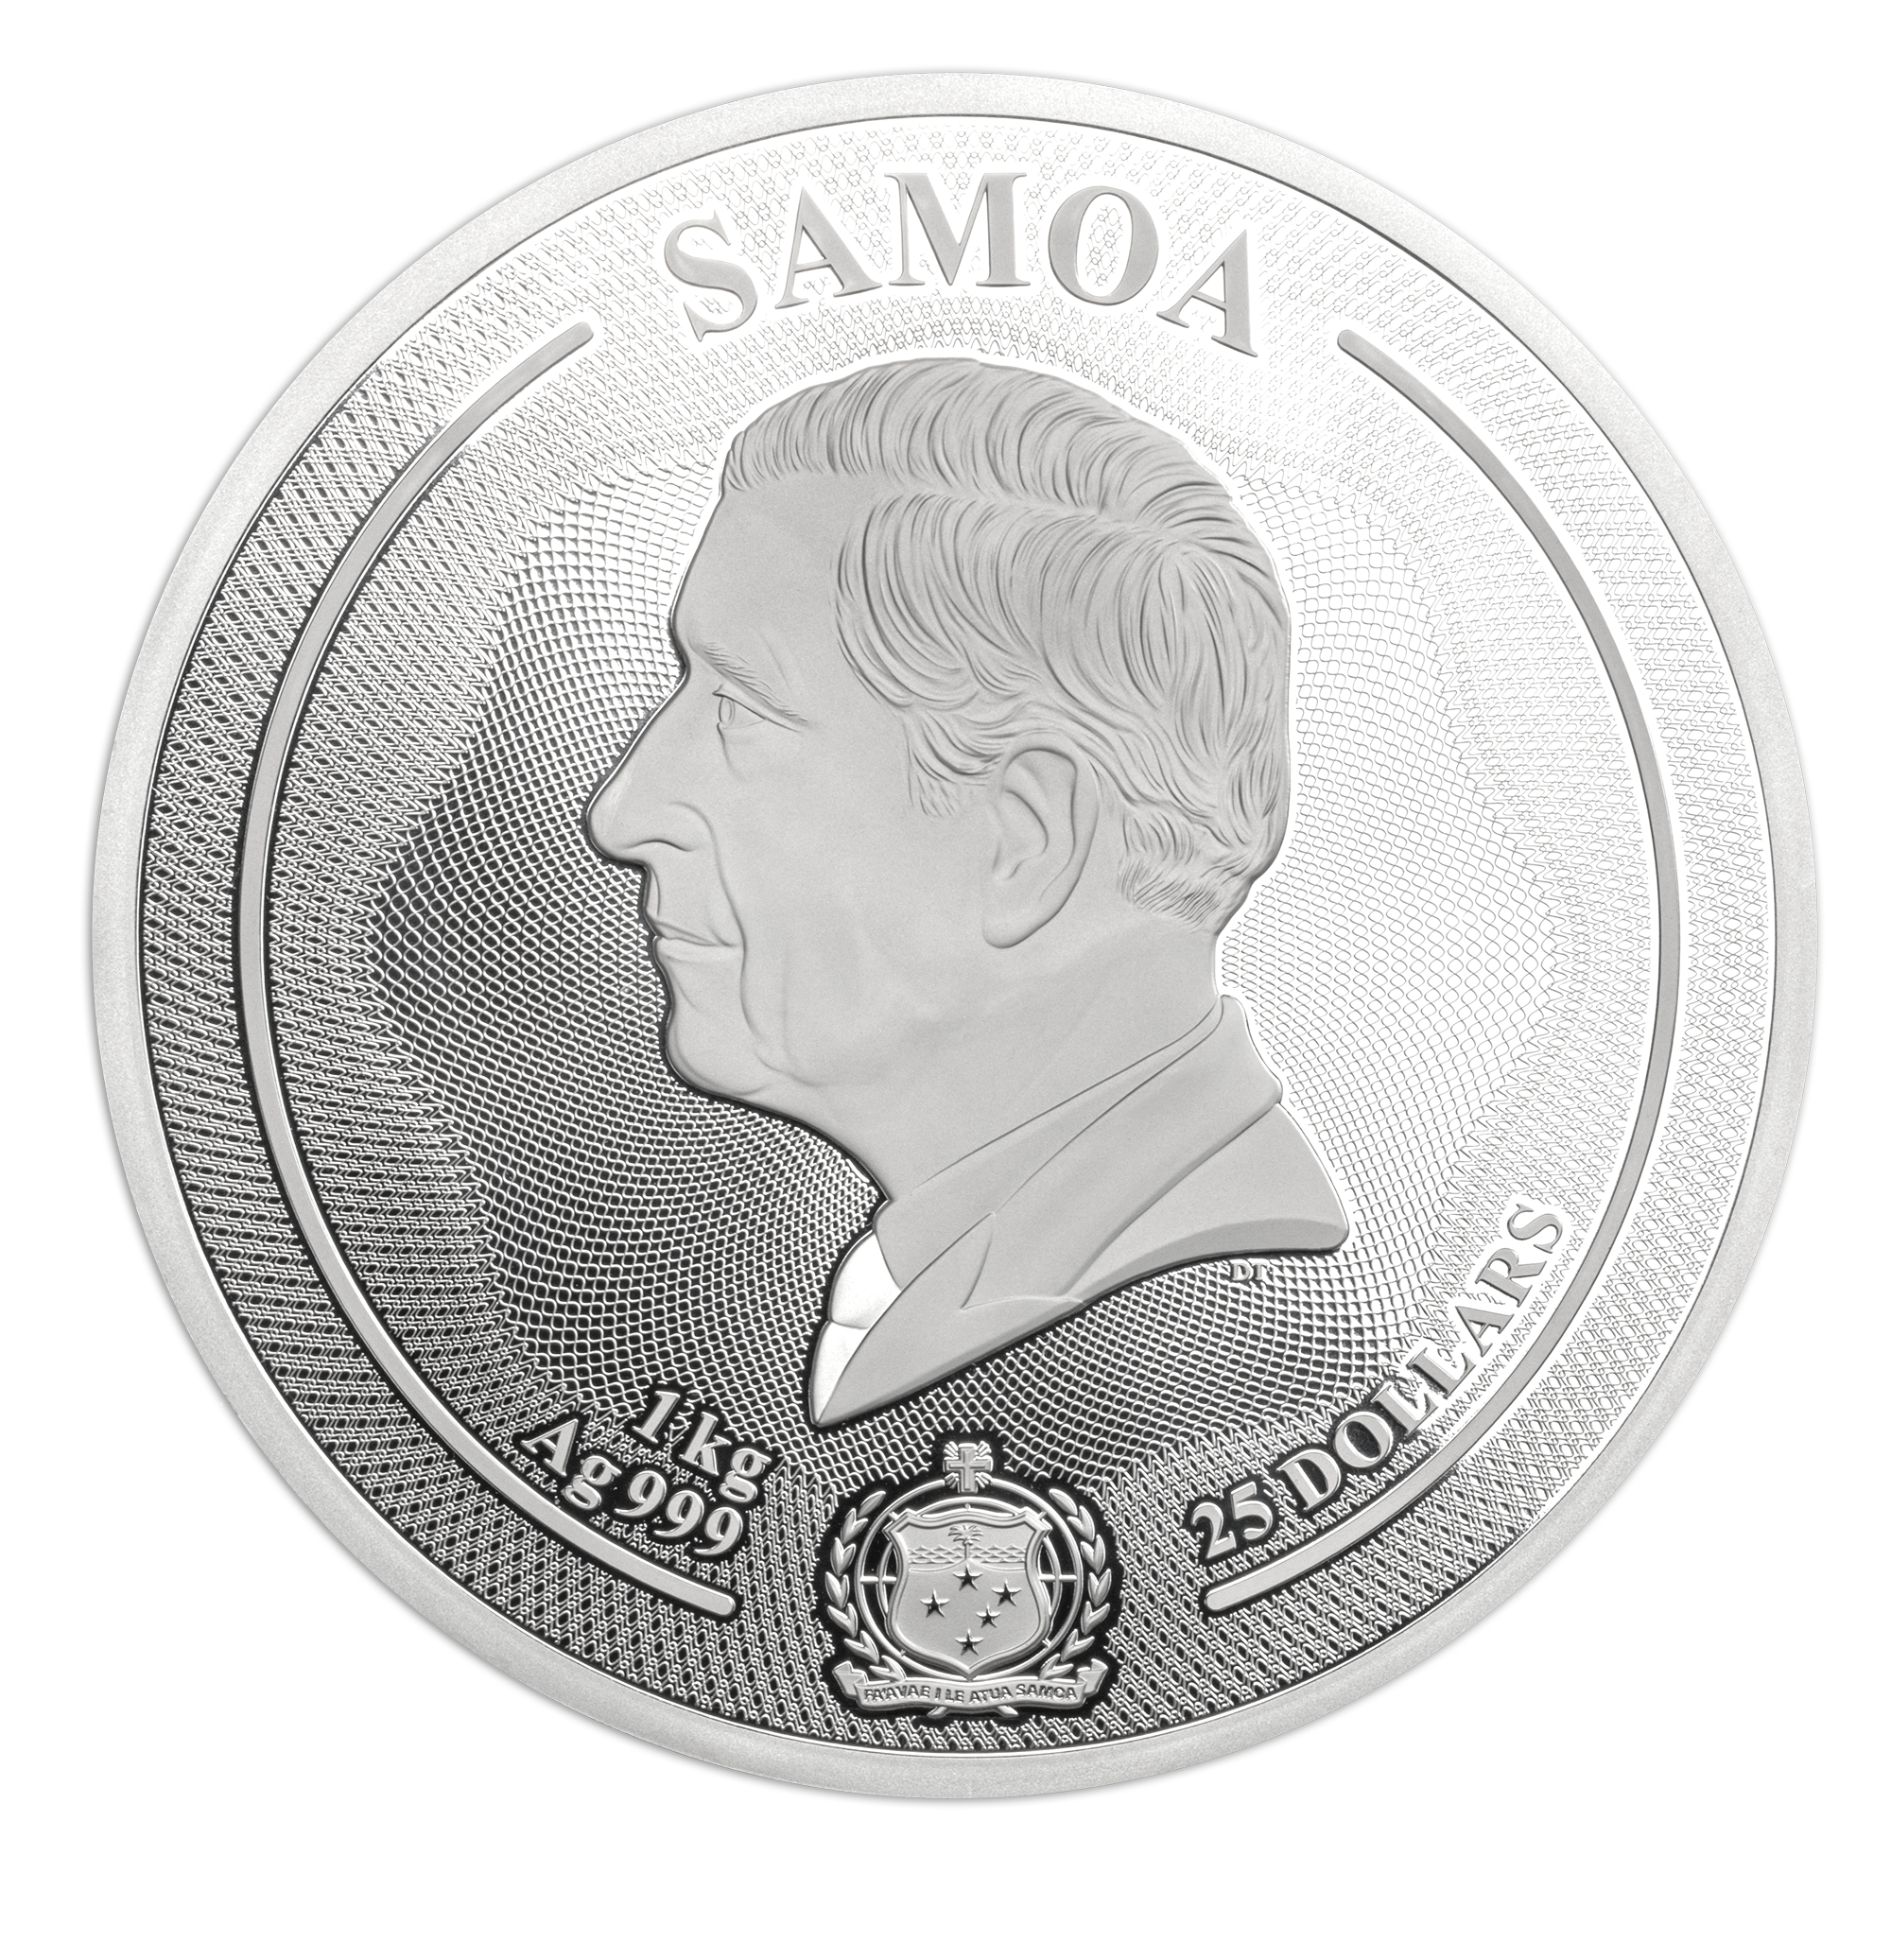 FOX Majestic Wildlife 1 Kg Kilo Silver Coin $25 Samoa 2024